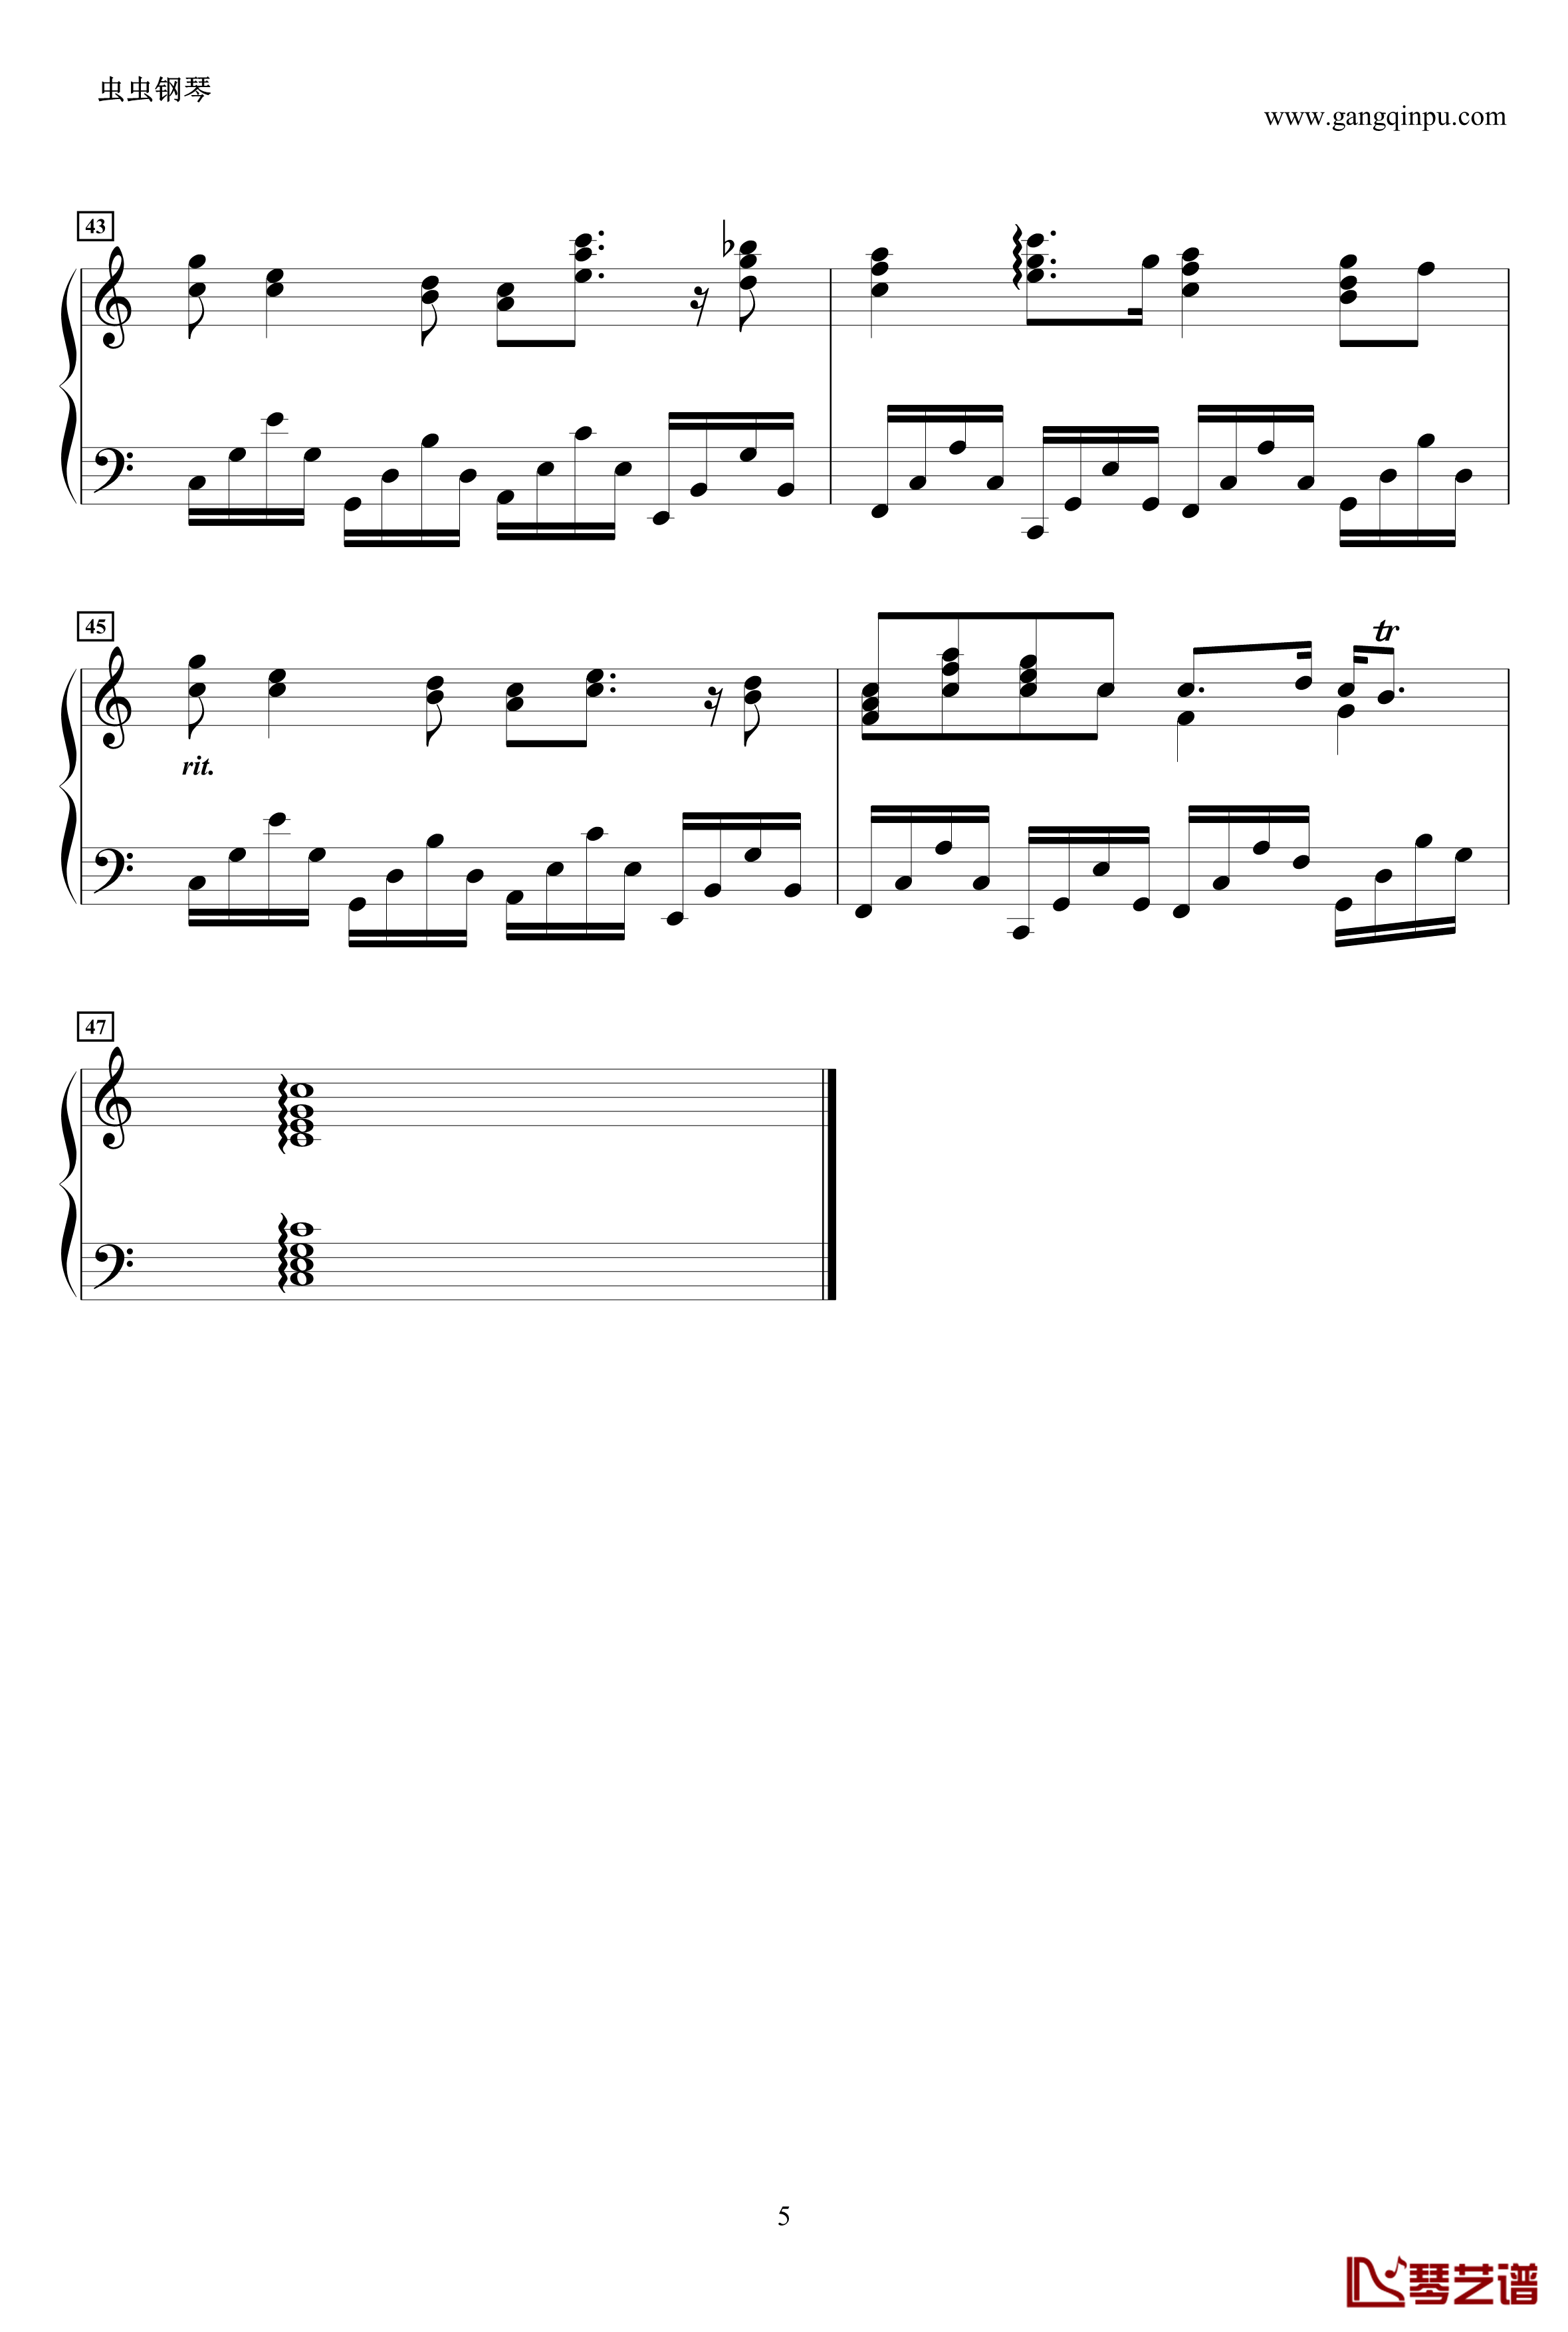 Canon Adapted for Piano, Original钢琴谱-卡农巴洛克原版的钢琴变奏-Johann Pachelbel5